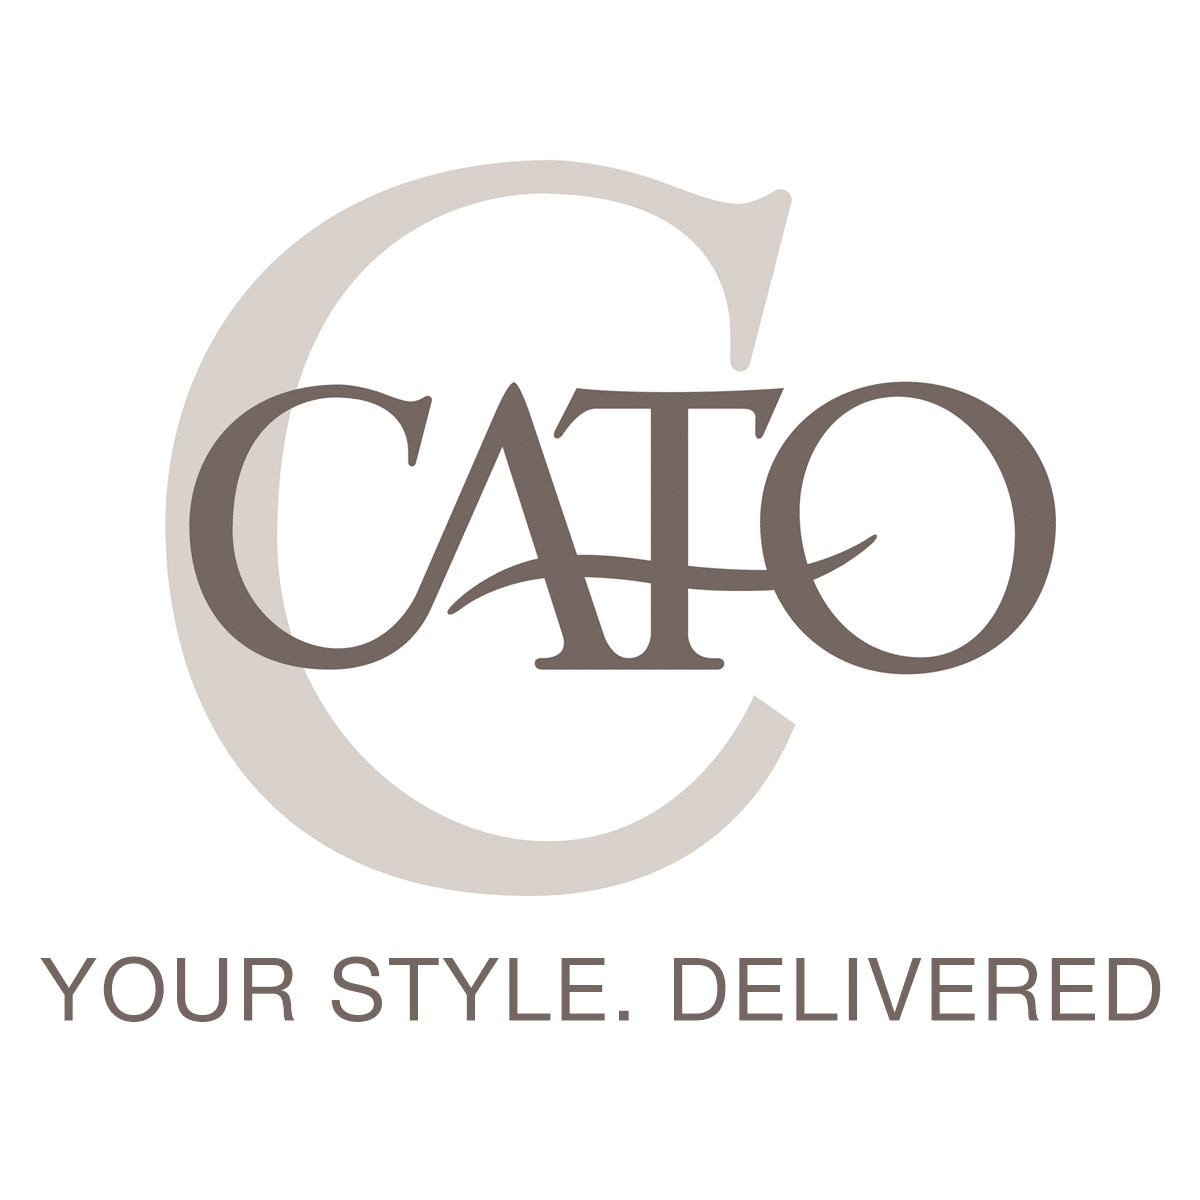 Cato Logo - Cato Fashions Social Logo